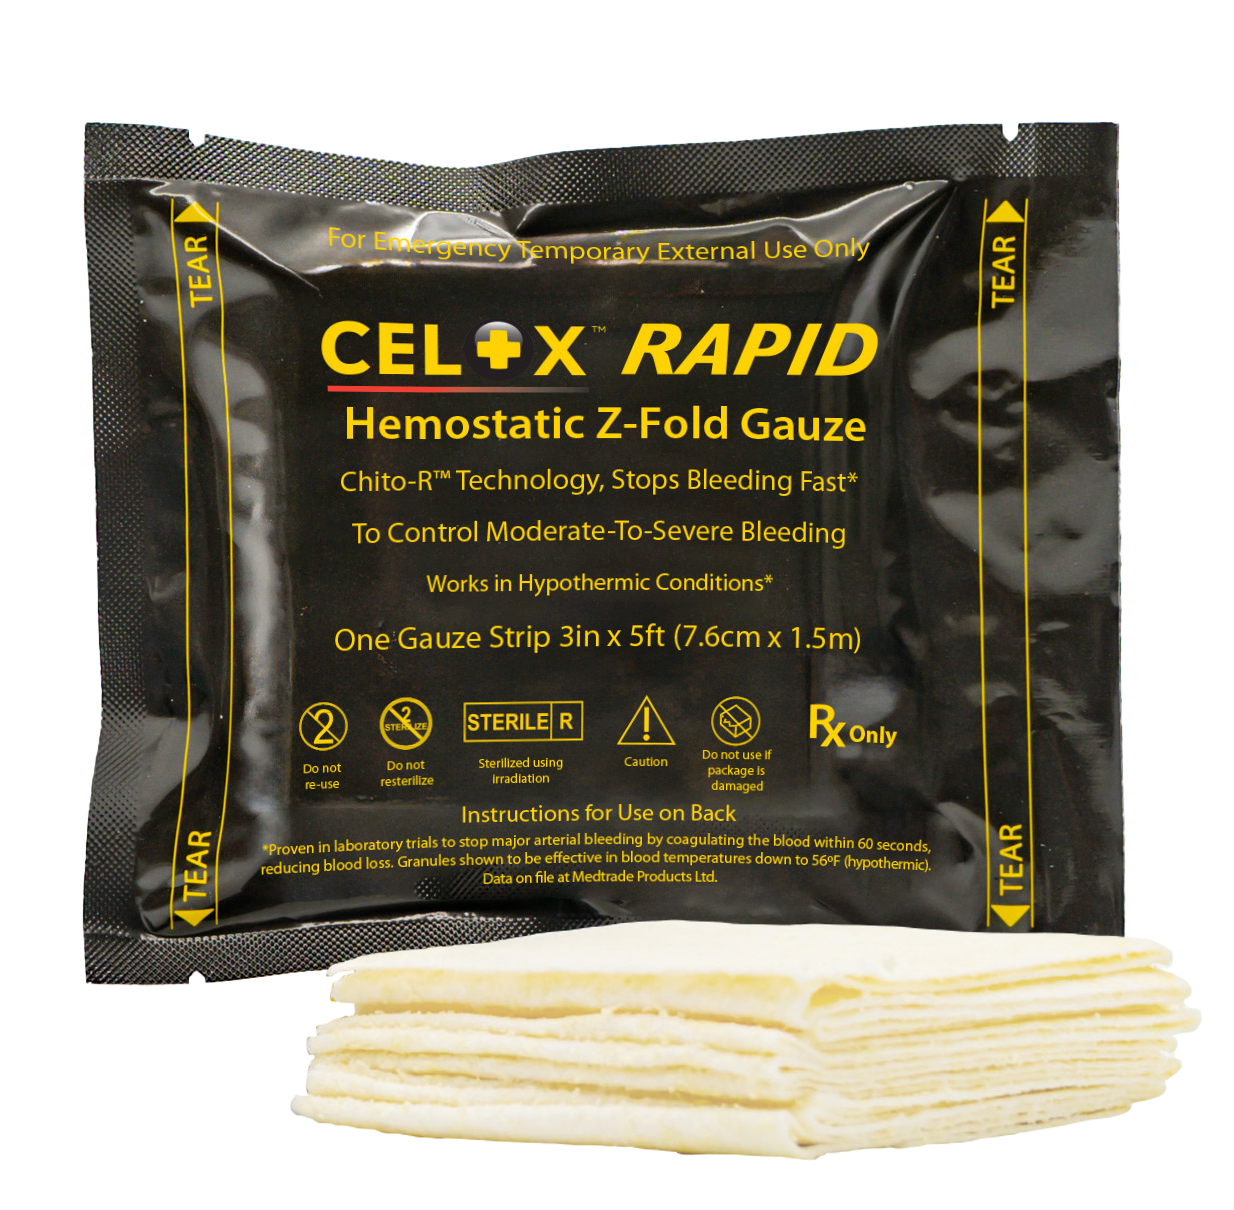 Celox Rapid Hemostatic Z-Fold Gauze